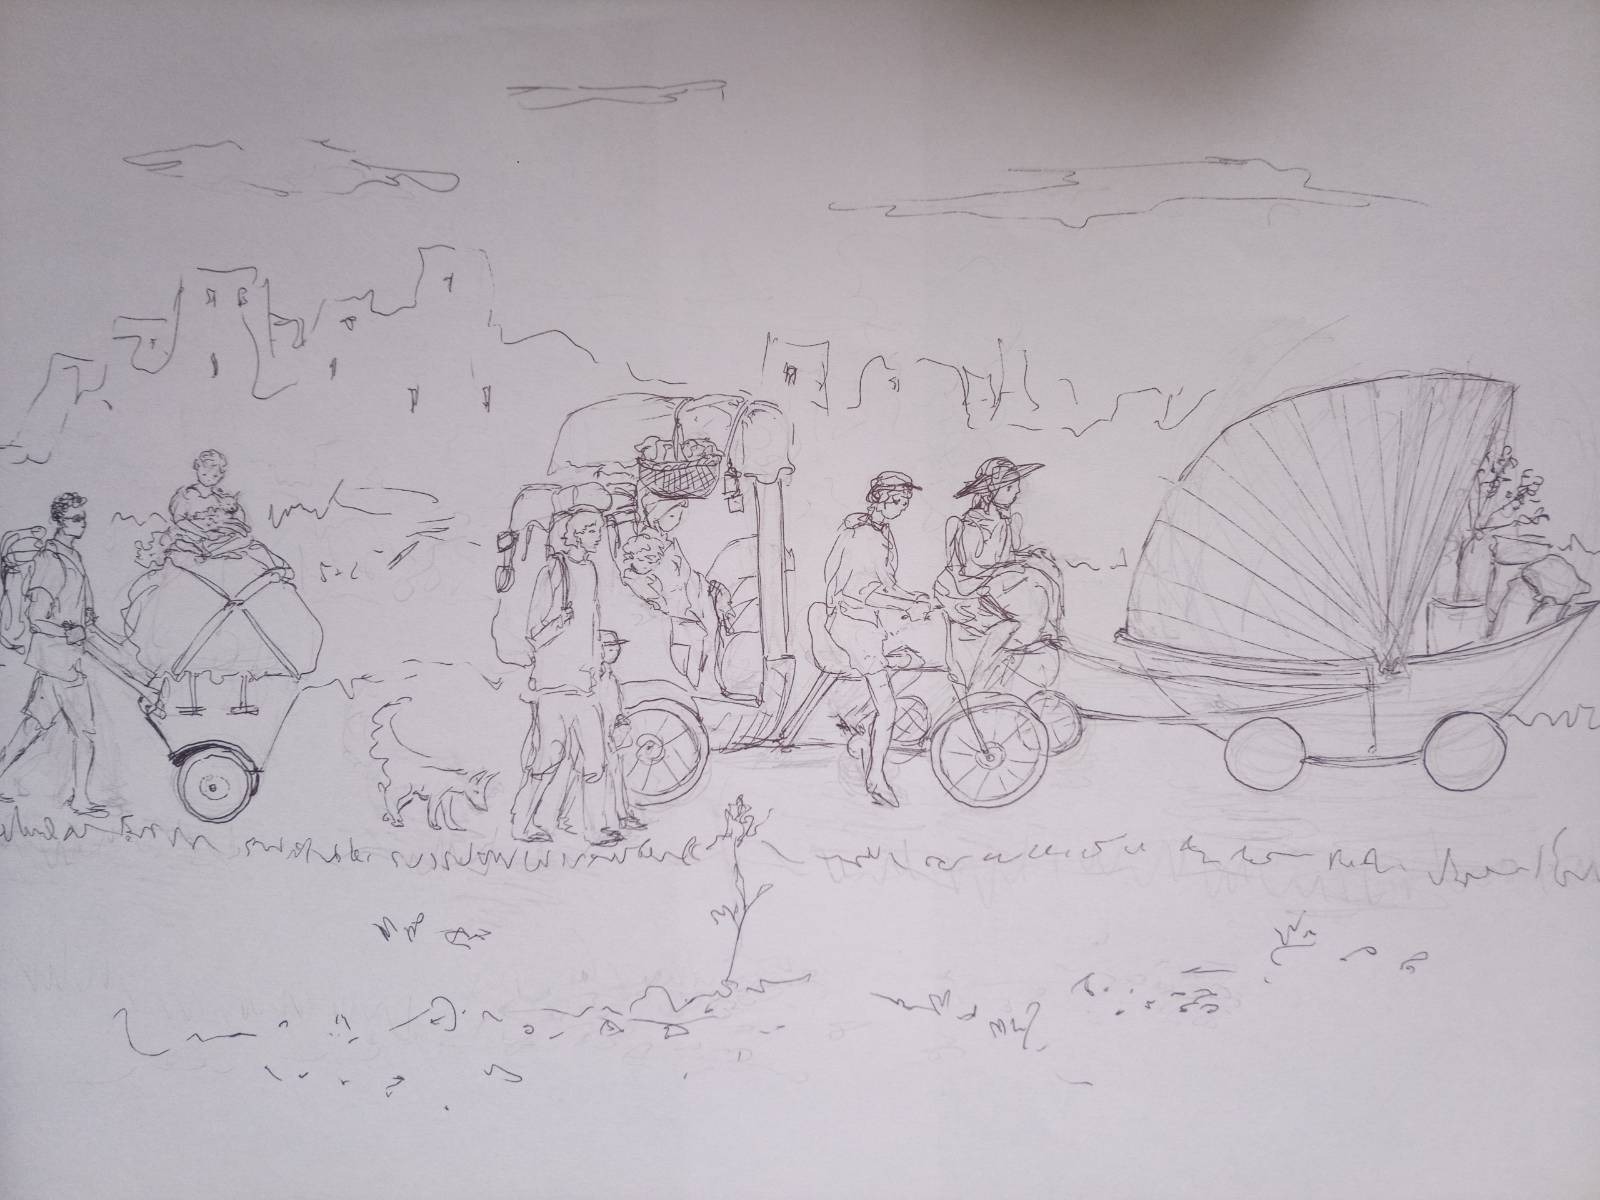 A rough sketch of a DIY vehicles caravan passing through a crumbling city.